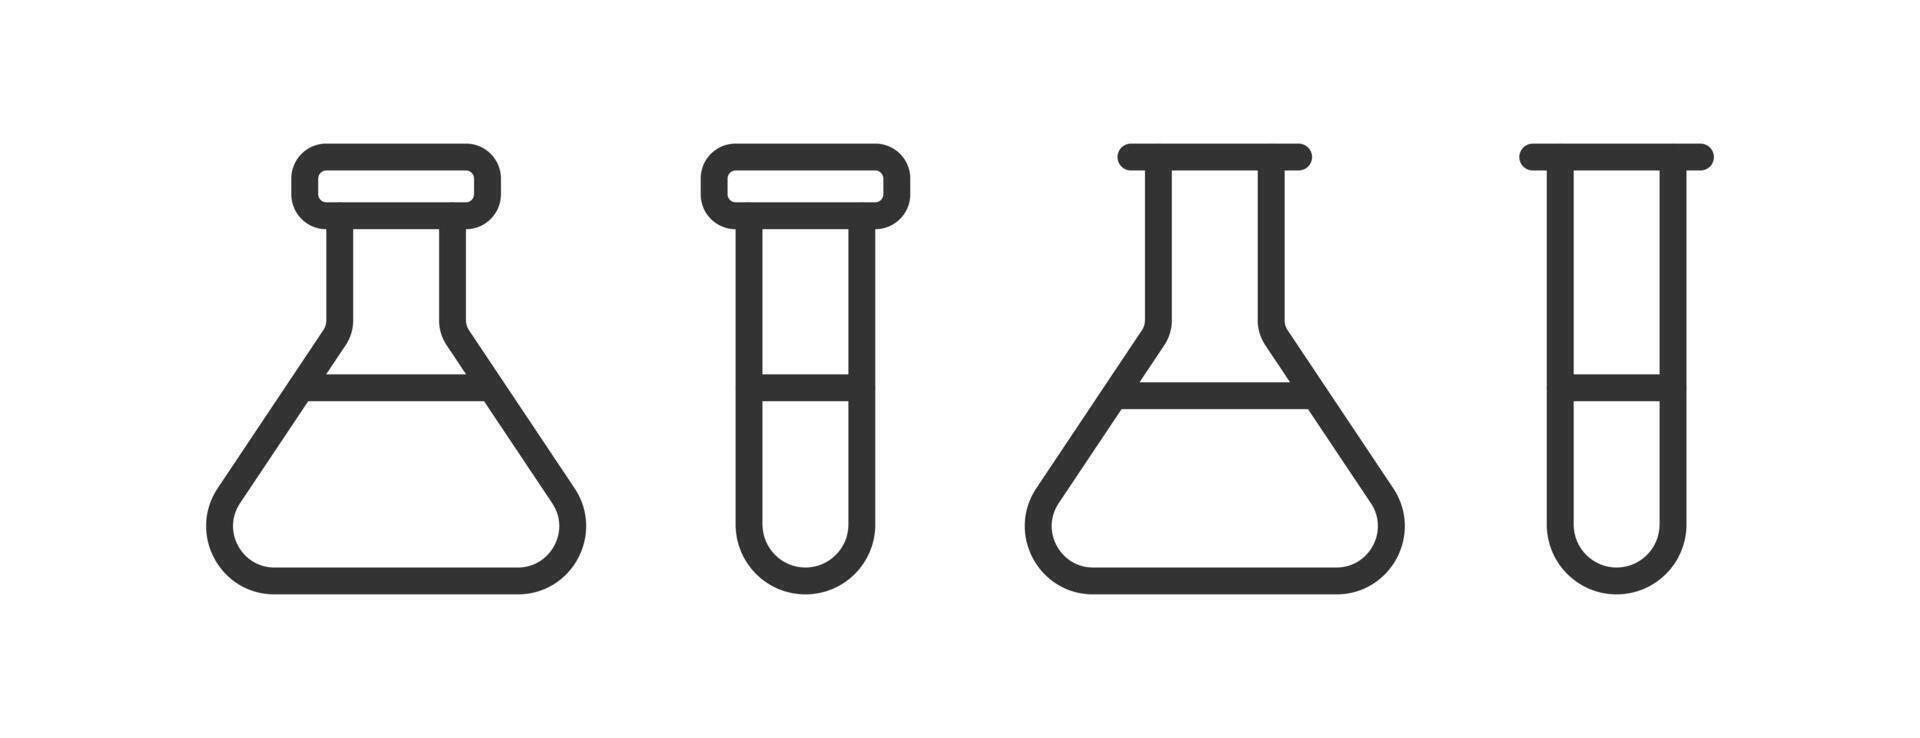 laboratorium flaska ikon. kemisk bägare vektor. kemi vetenskap Utrustning. vektor